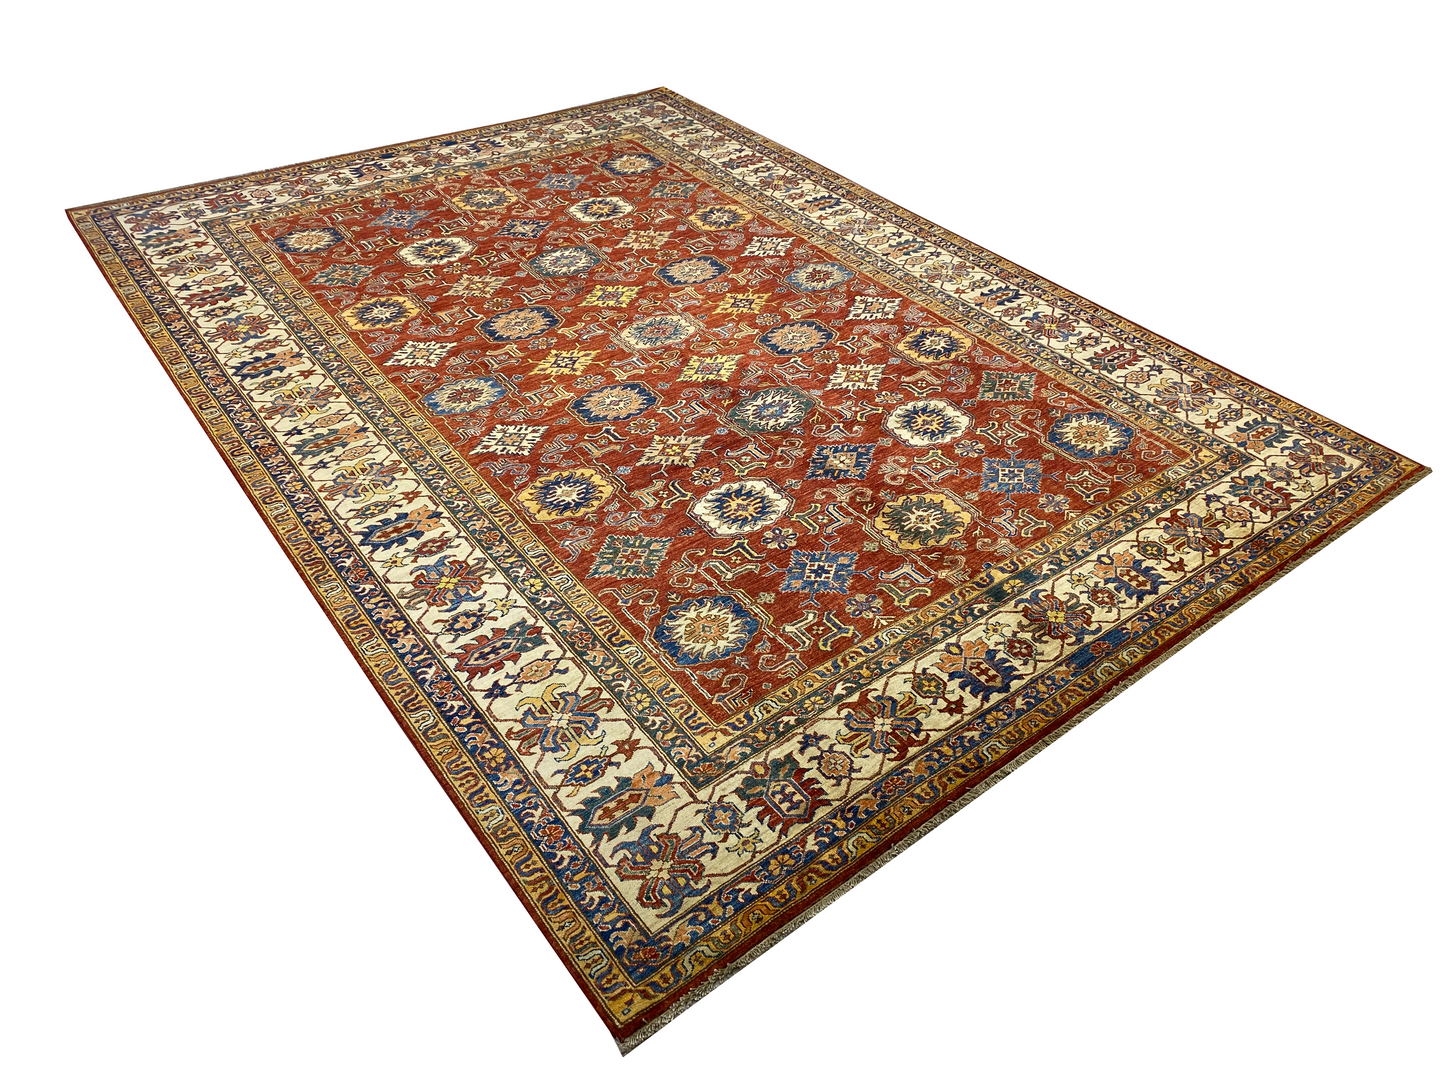 Şirvan Bicolor Carpet 377 X 269 cm